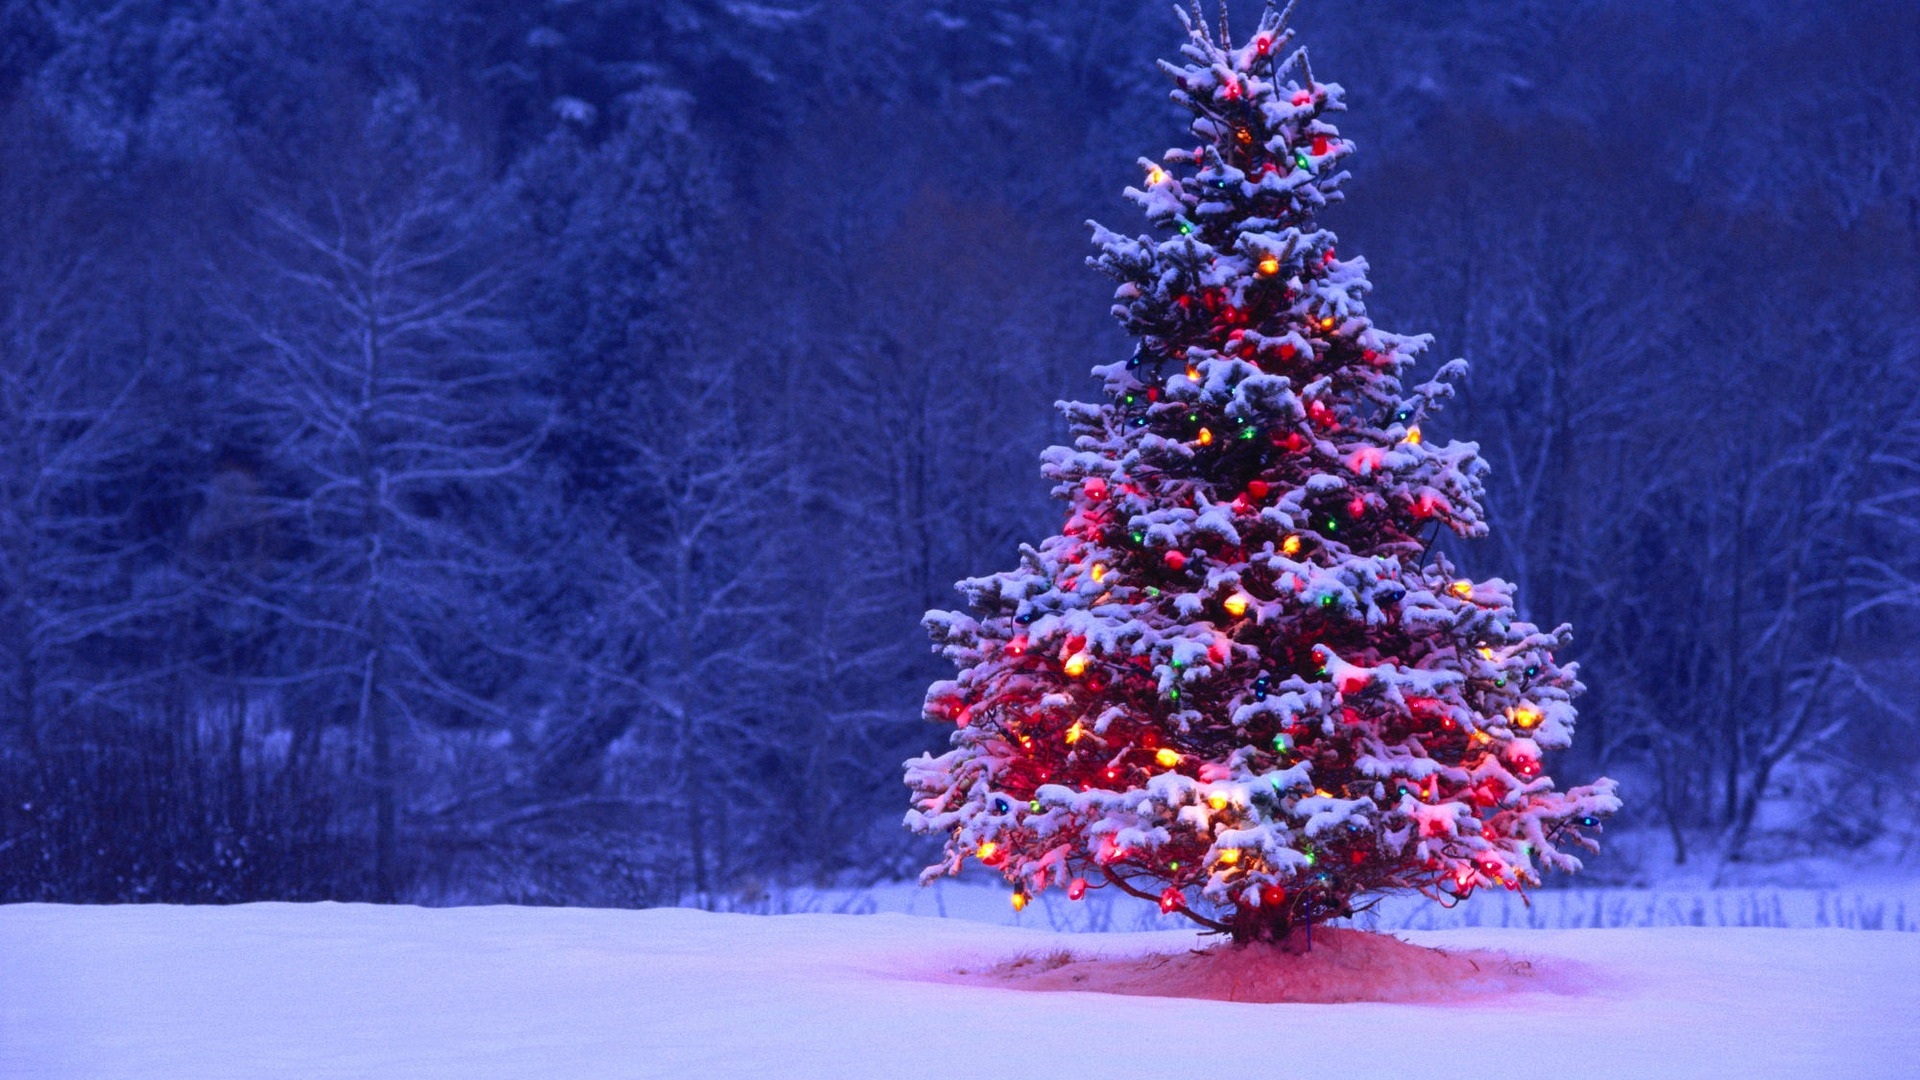 http://kalumatravel.co.uk/wp-content/uploads/2015/11/Christmas-Tree-in-Snow.jpg